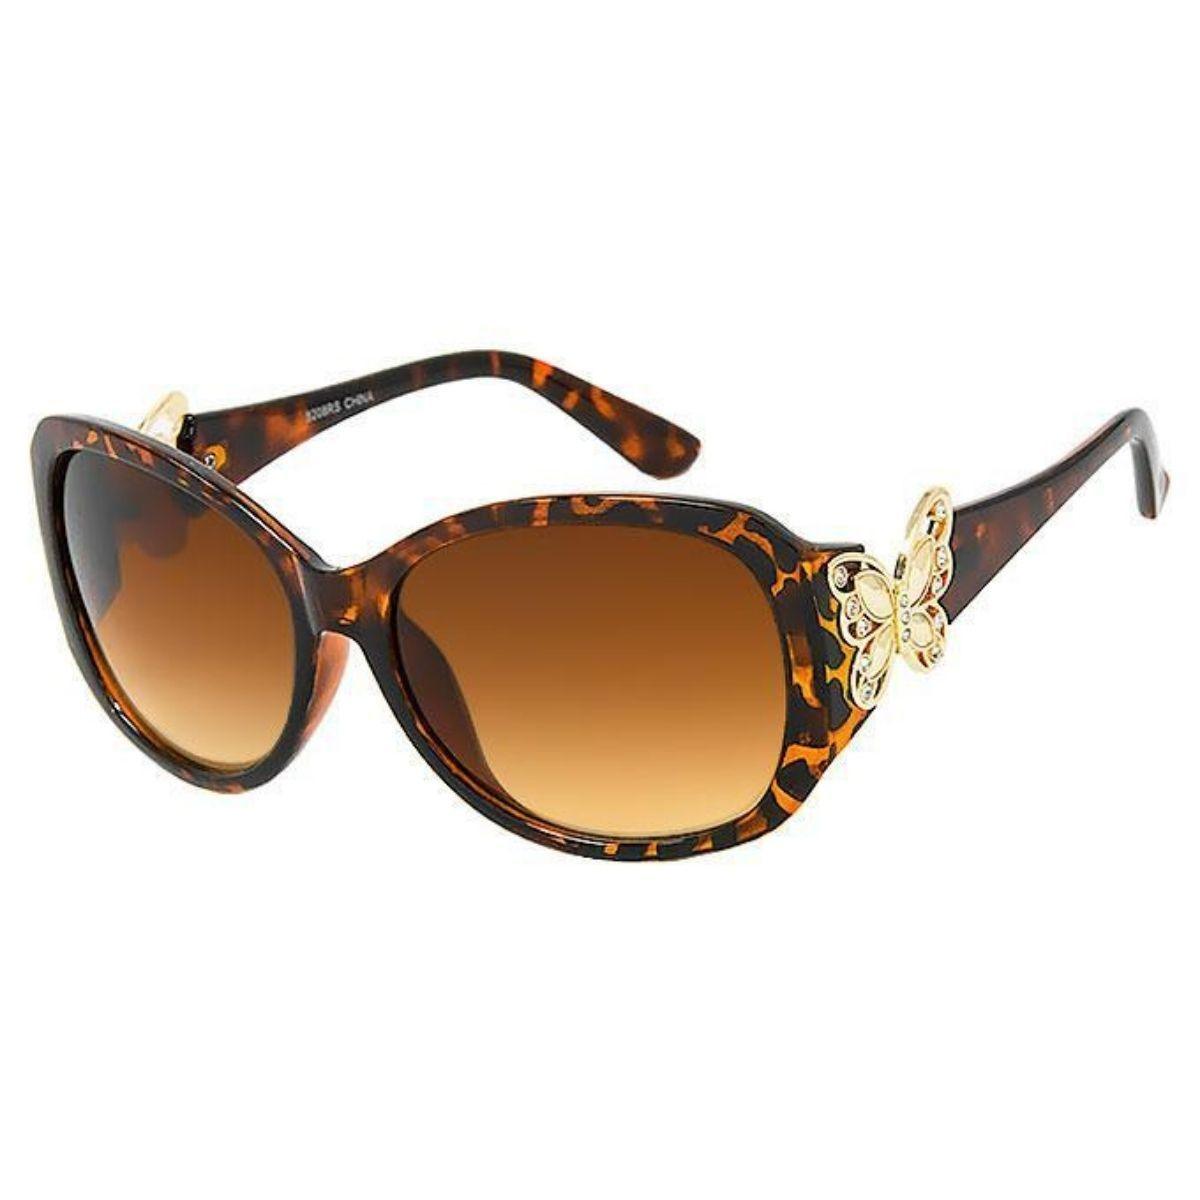 Stylish Round Faux Tortoiseshell Sunglasses for Women Butterfly Detail